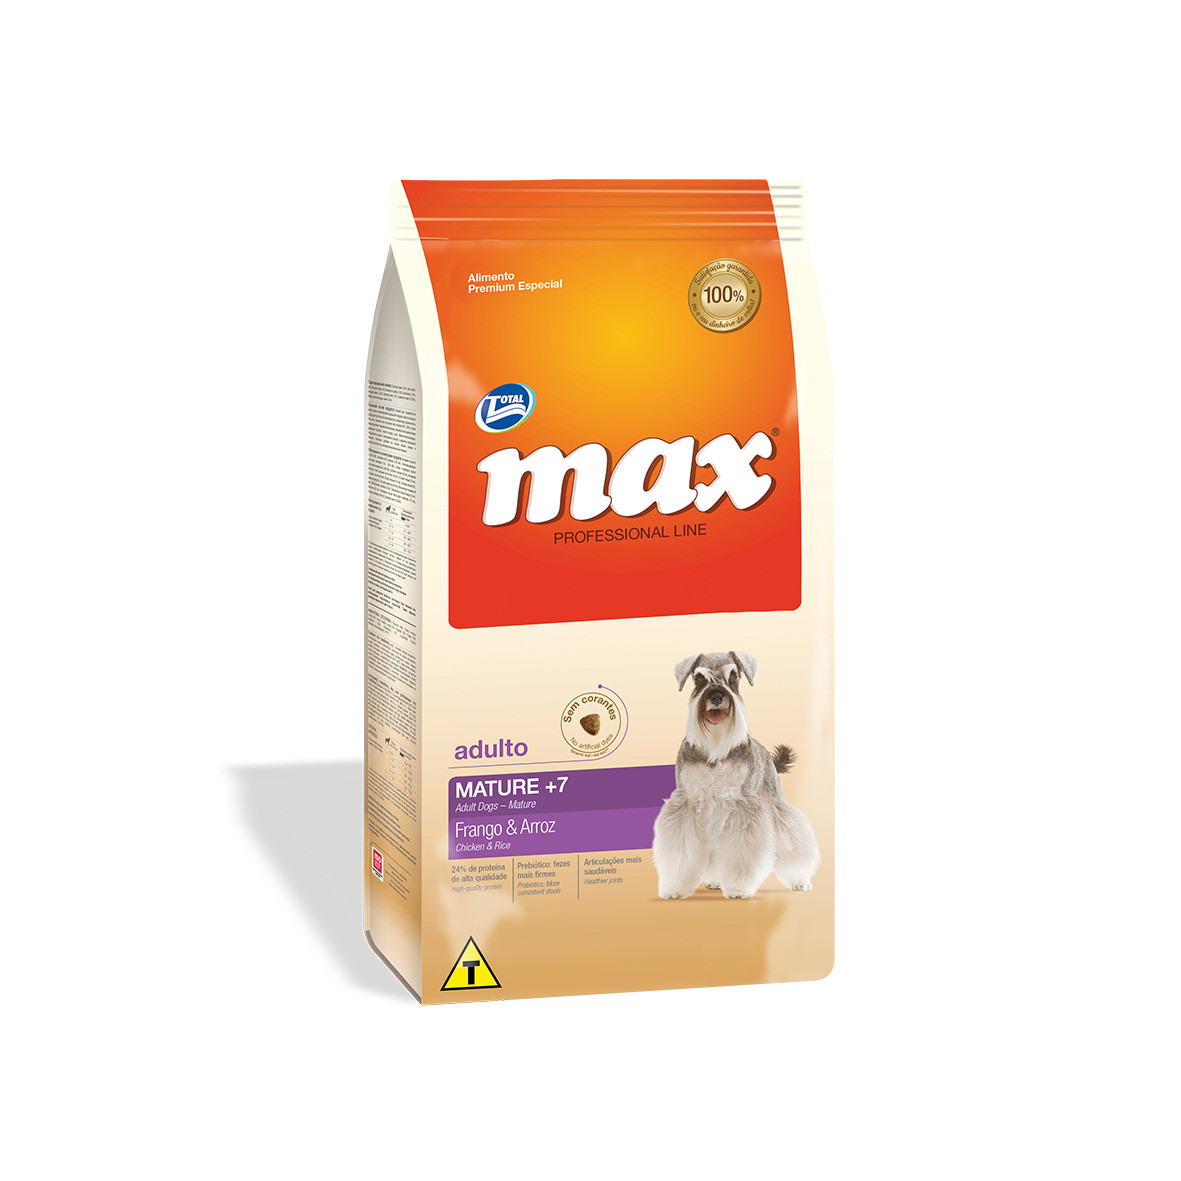 Imagen Max Professional Line Adulto Mature +7 Pollo & Arroz 2kg 1